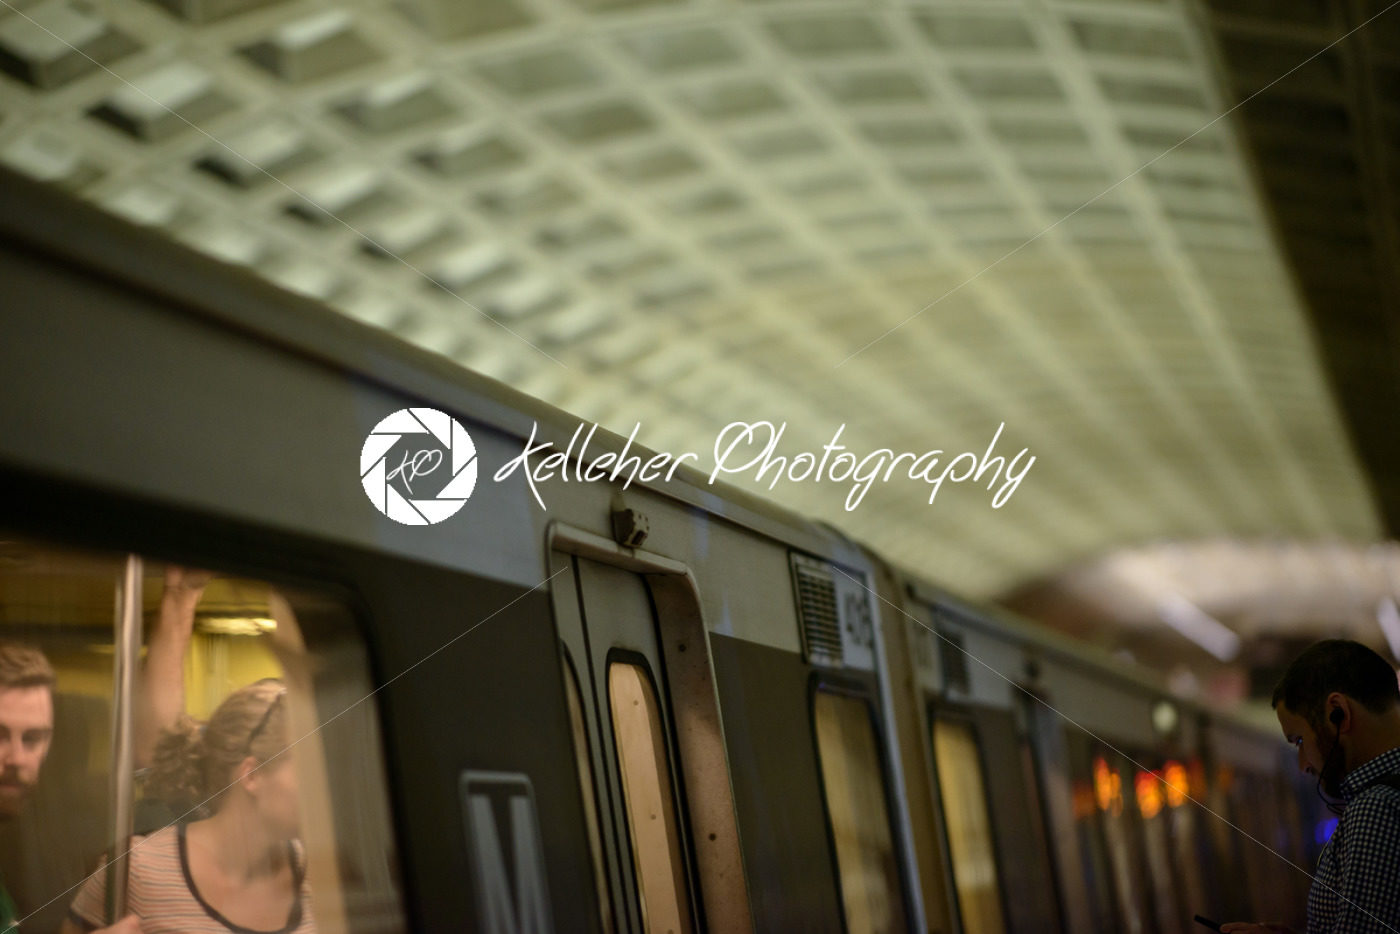 WASHINGTON, DISTRICT OF COLUMBIA – APRIL 14: Washington DC Metro Subway Train Station on April 14, 2017 - Kelleher Photography Store